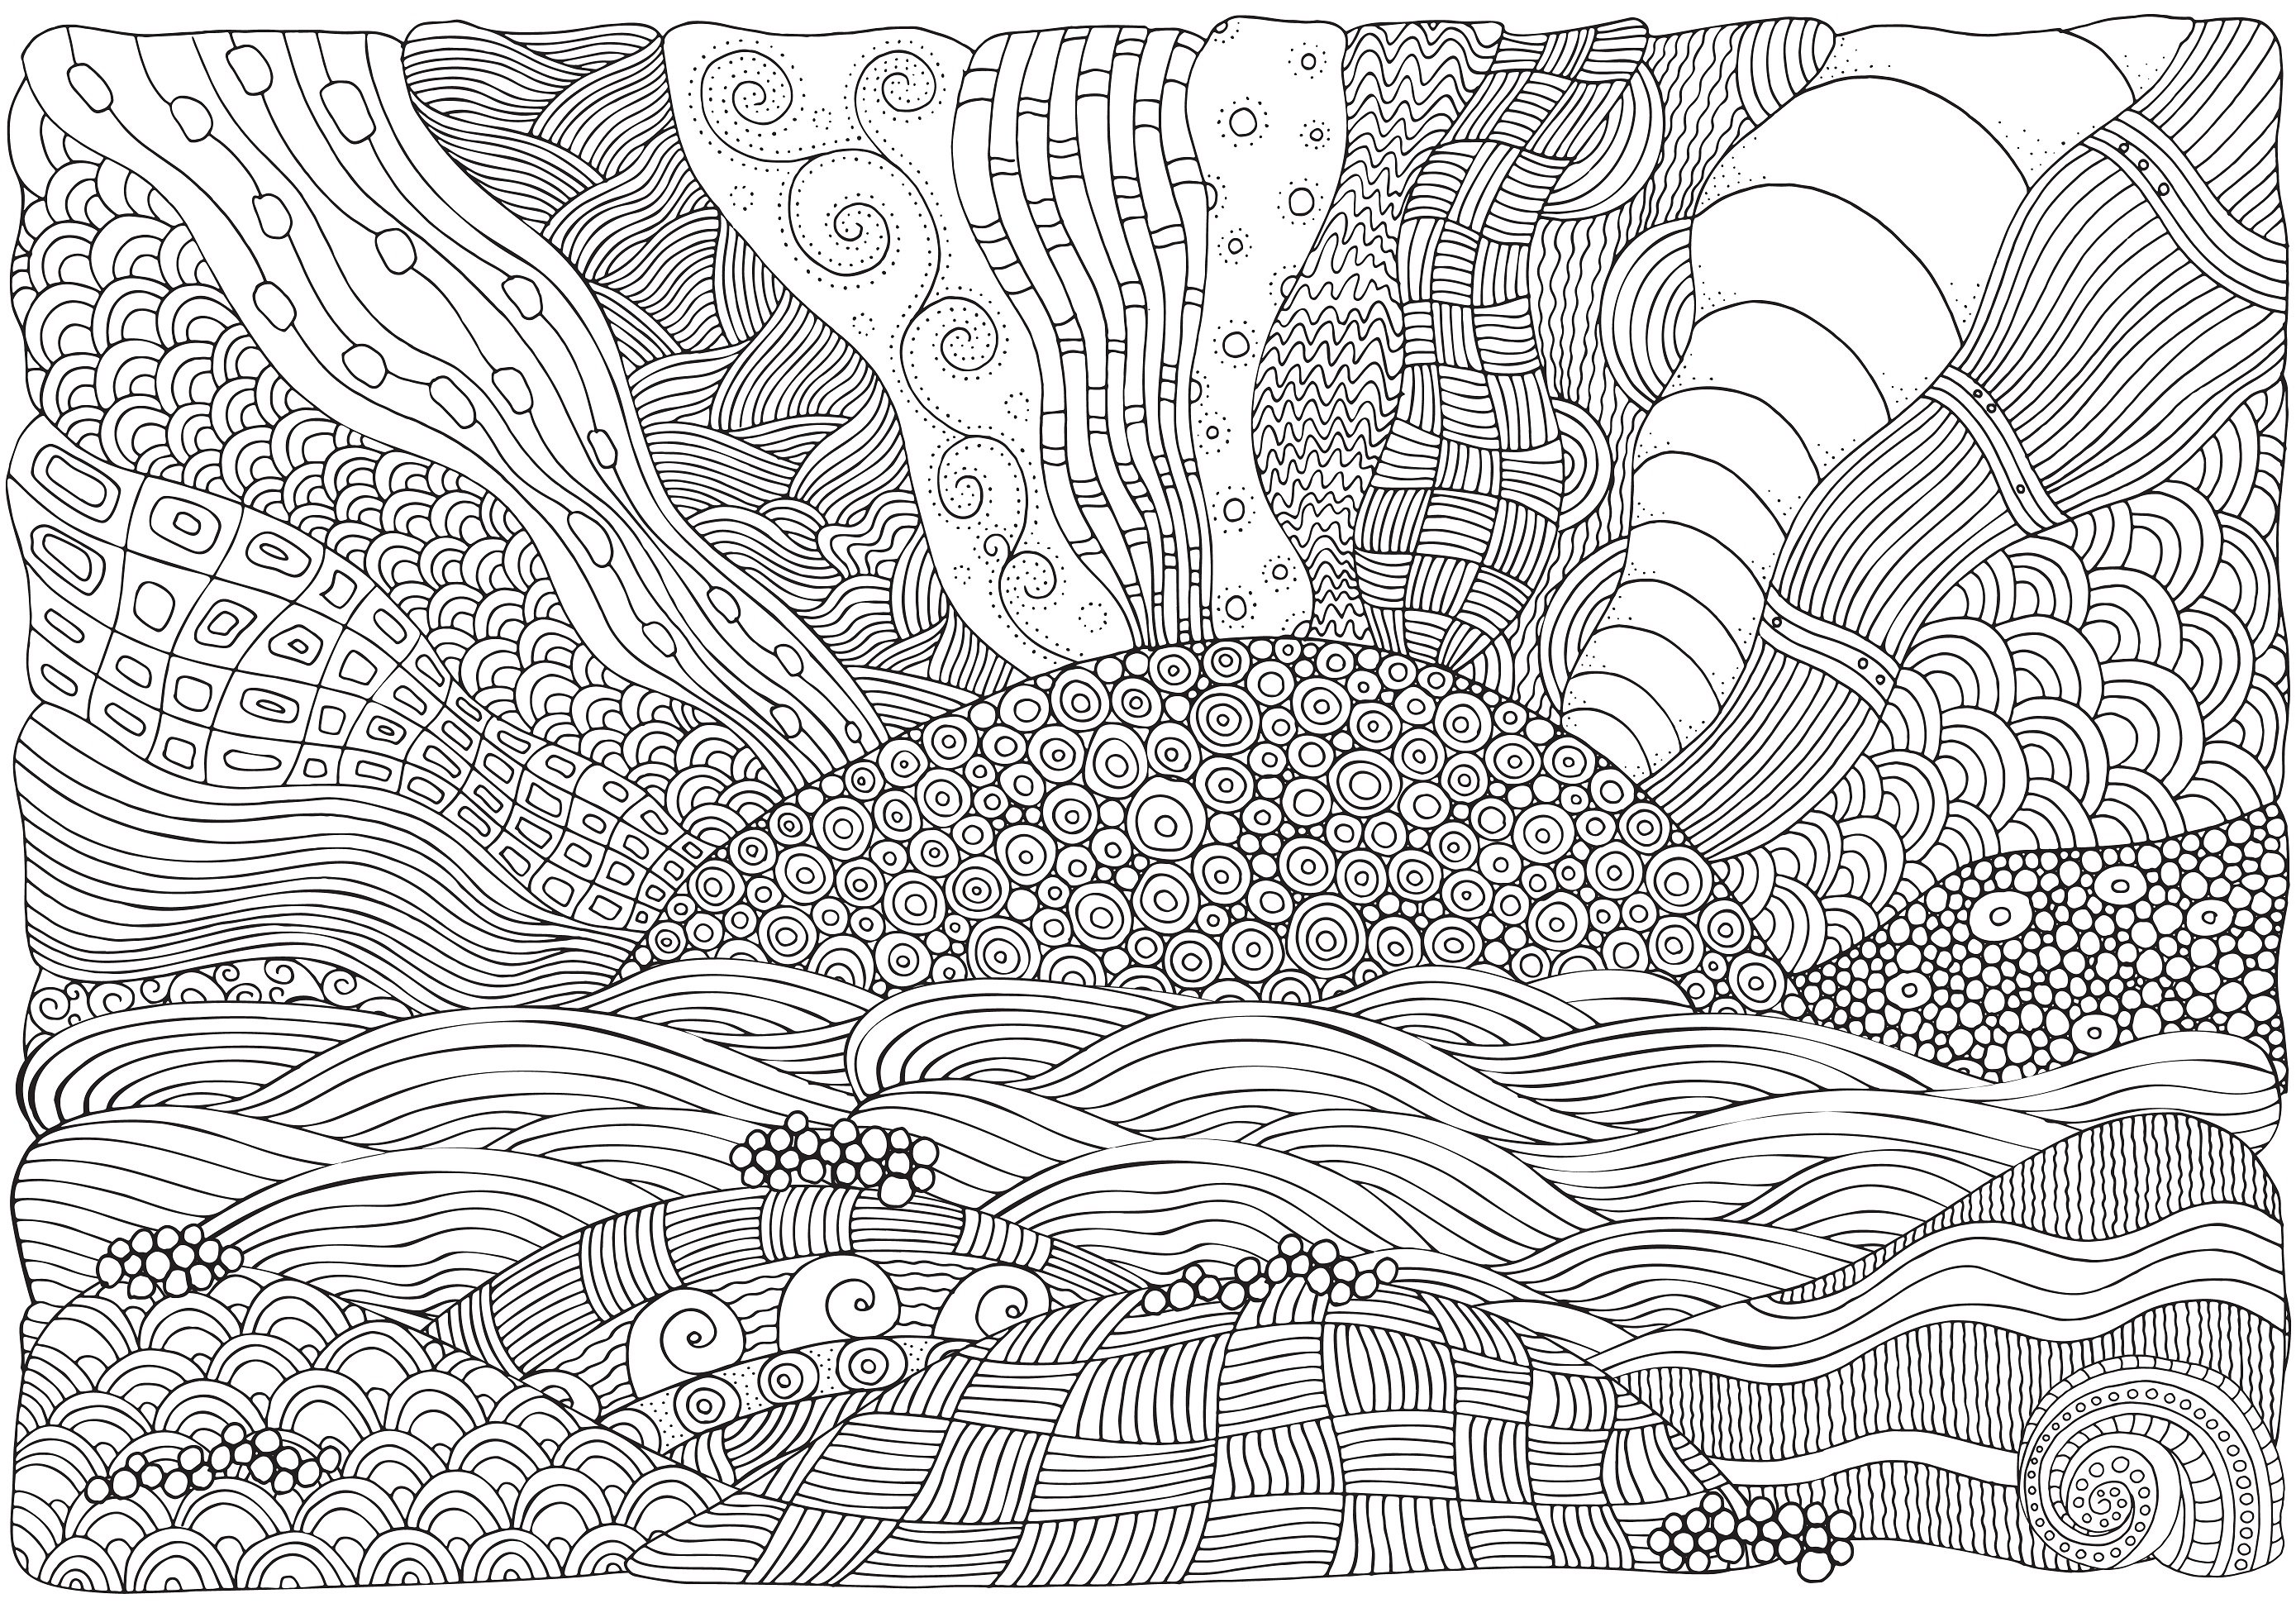 A Zentangle drawing.